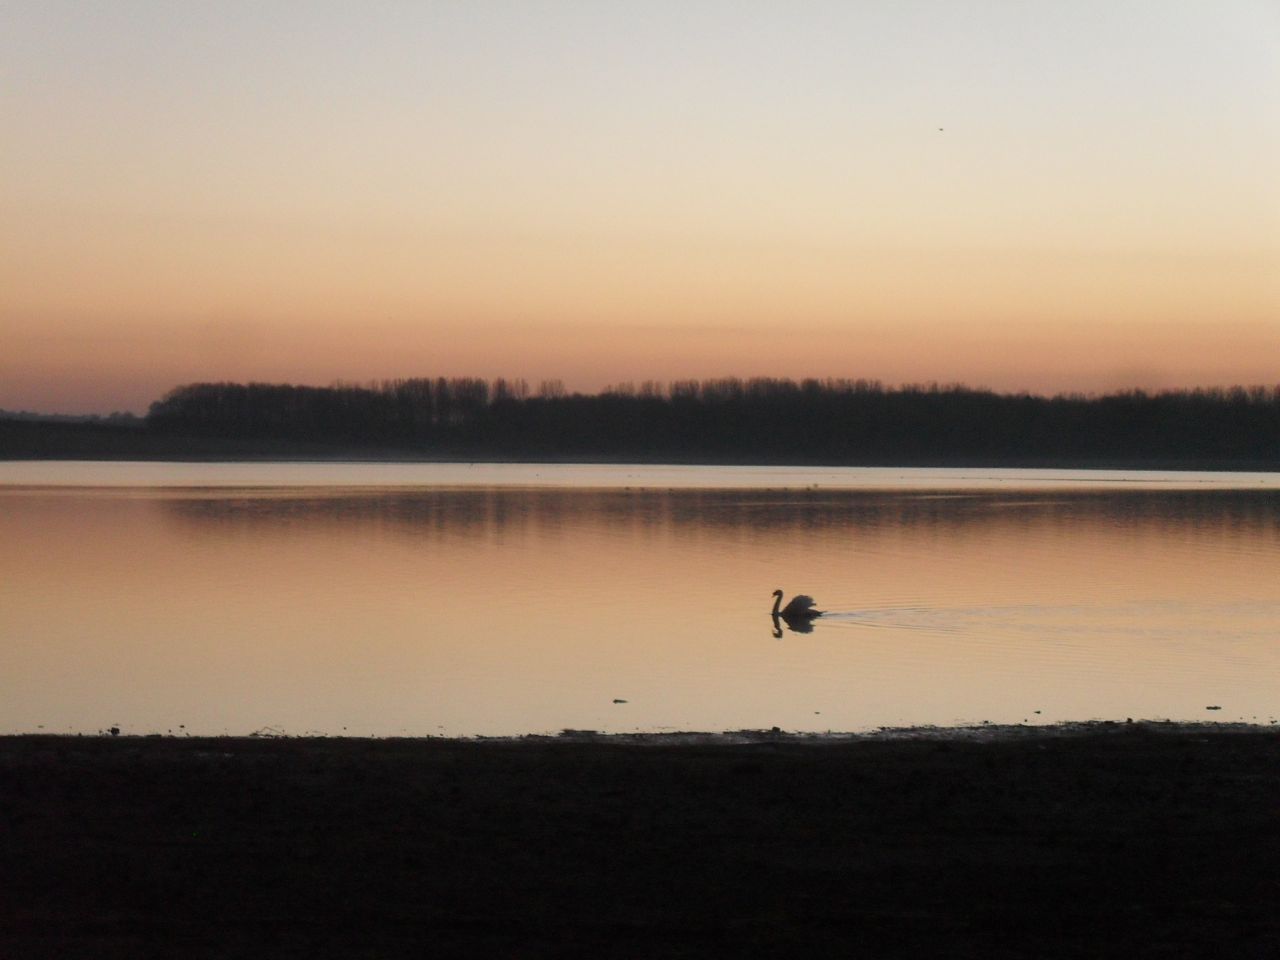 Swan on lake, photo by Marija Smits